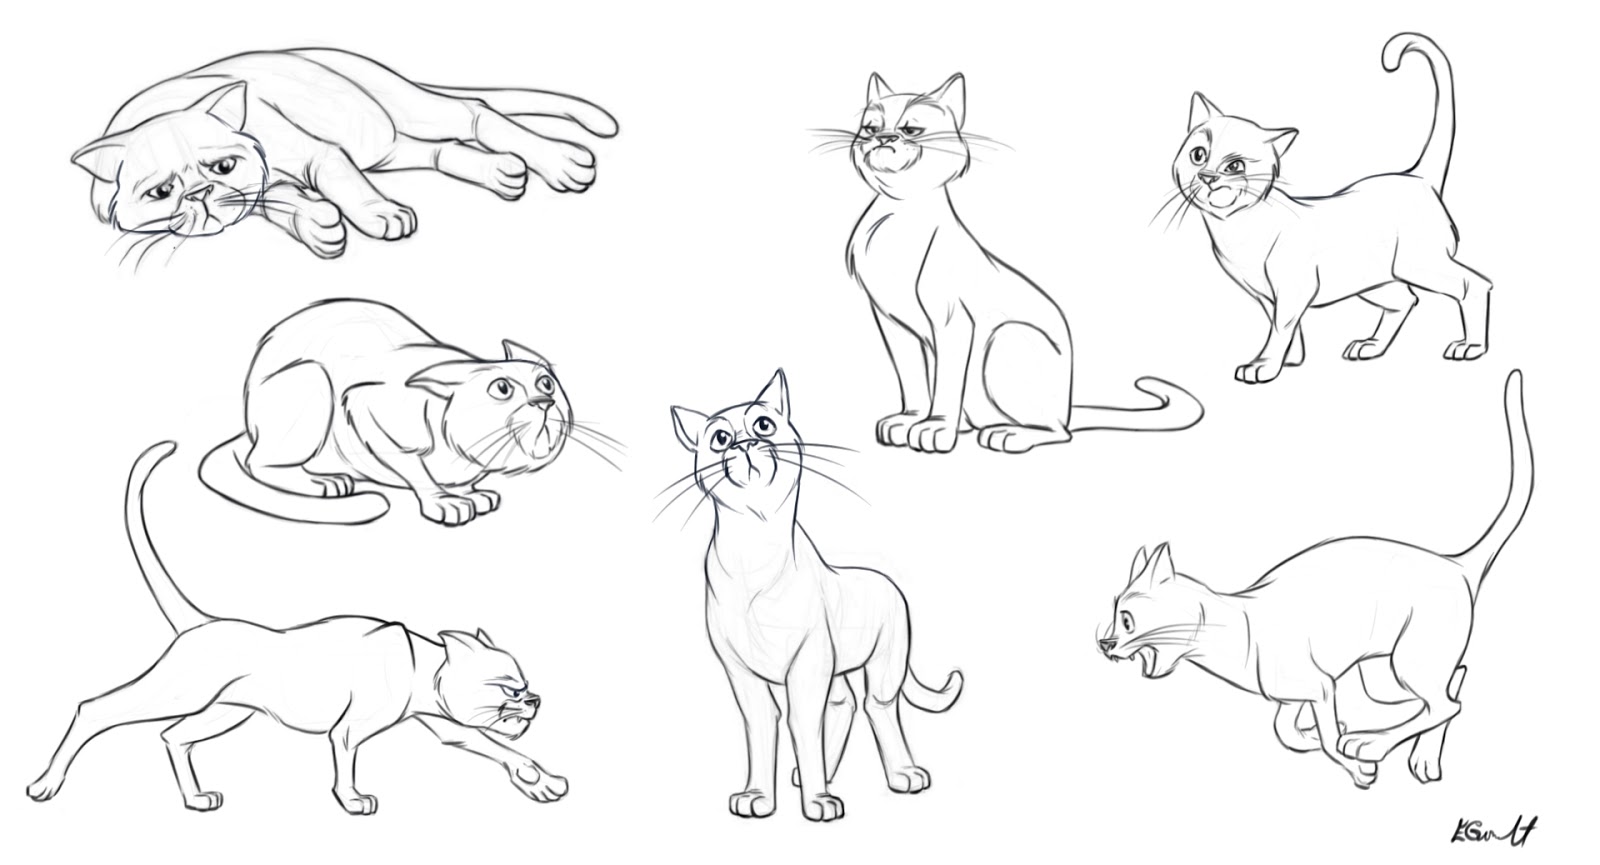 Emilie Goulet, CG Animator: Cat study